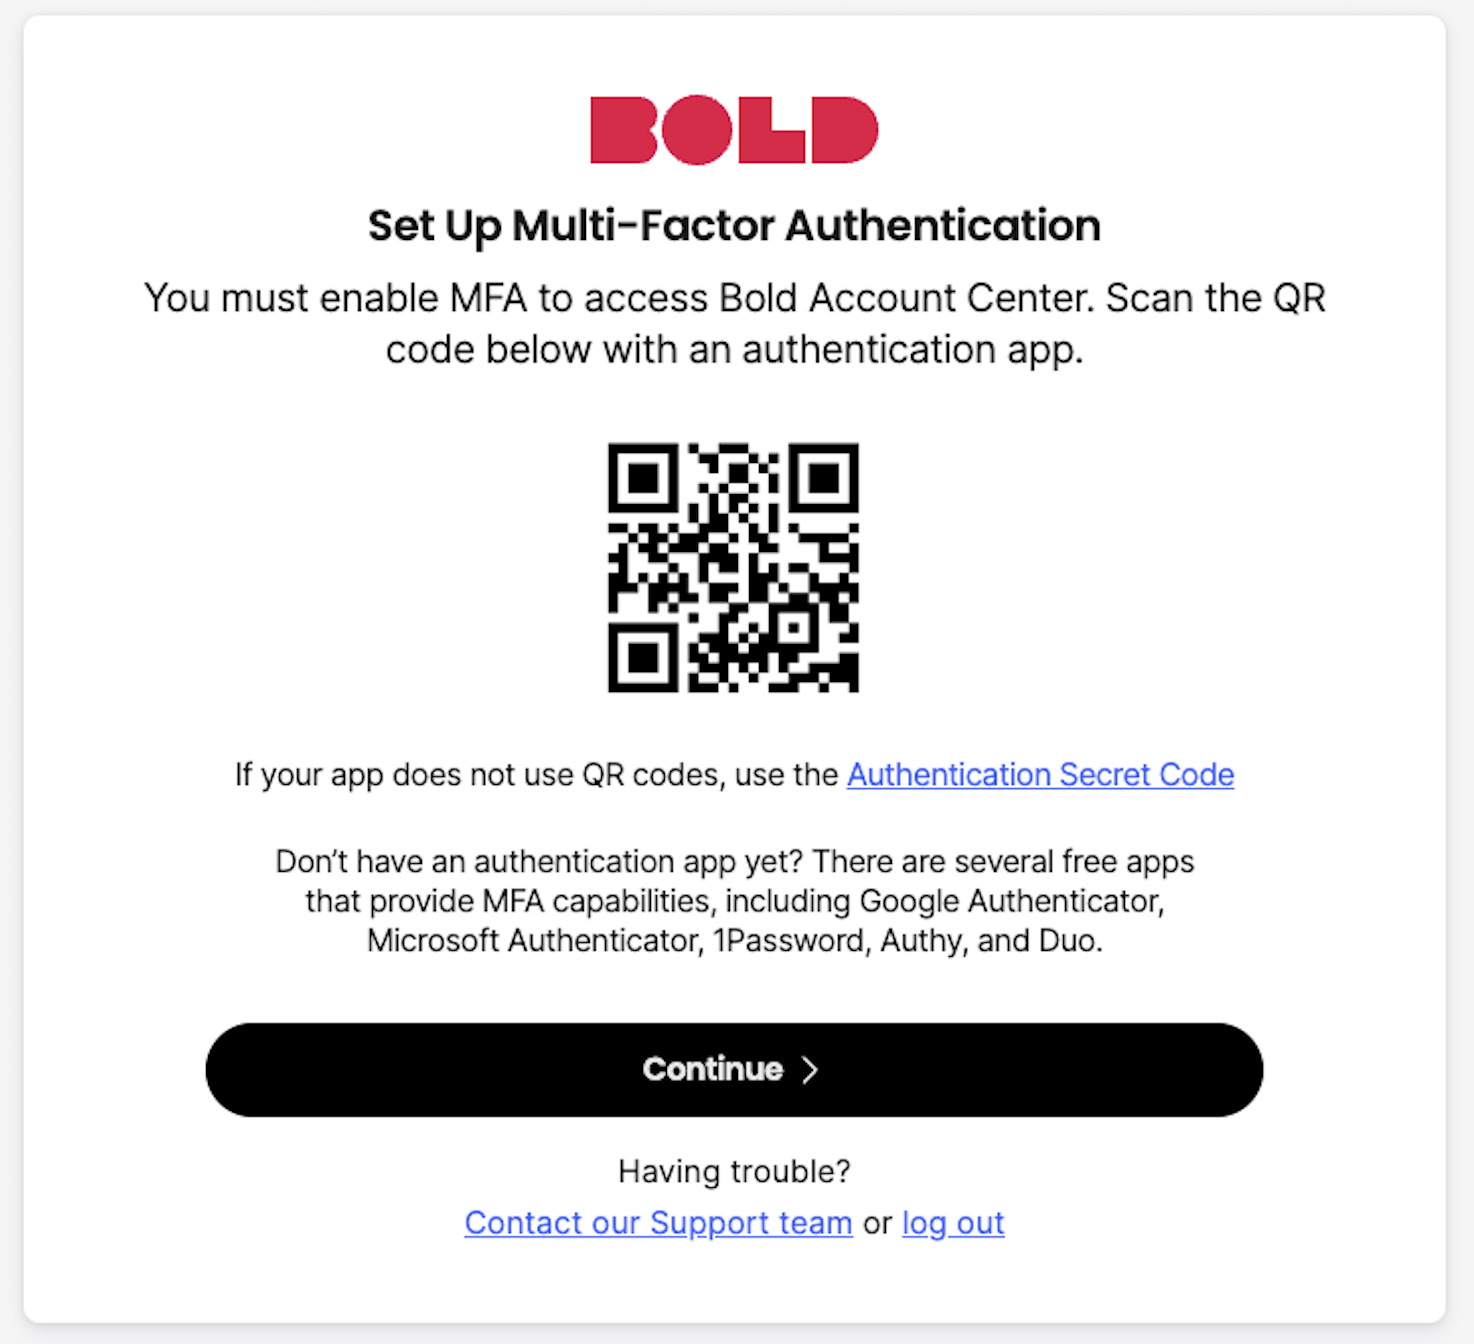 Multi-factor authentication